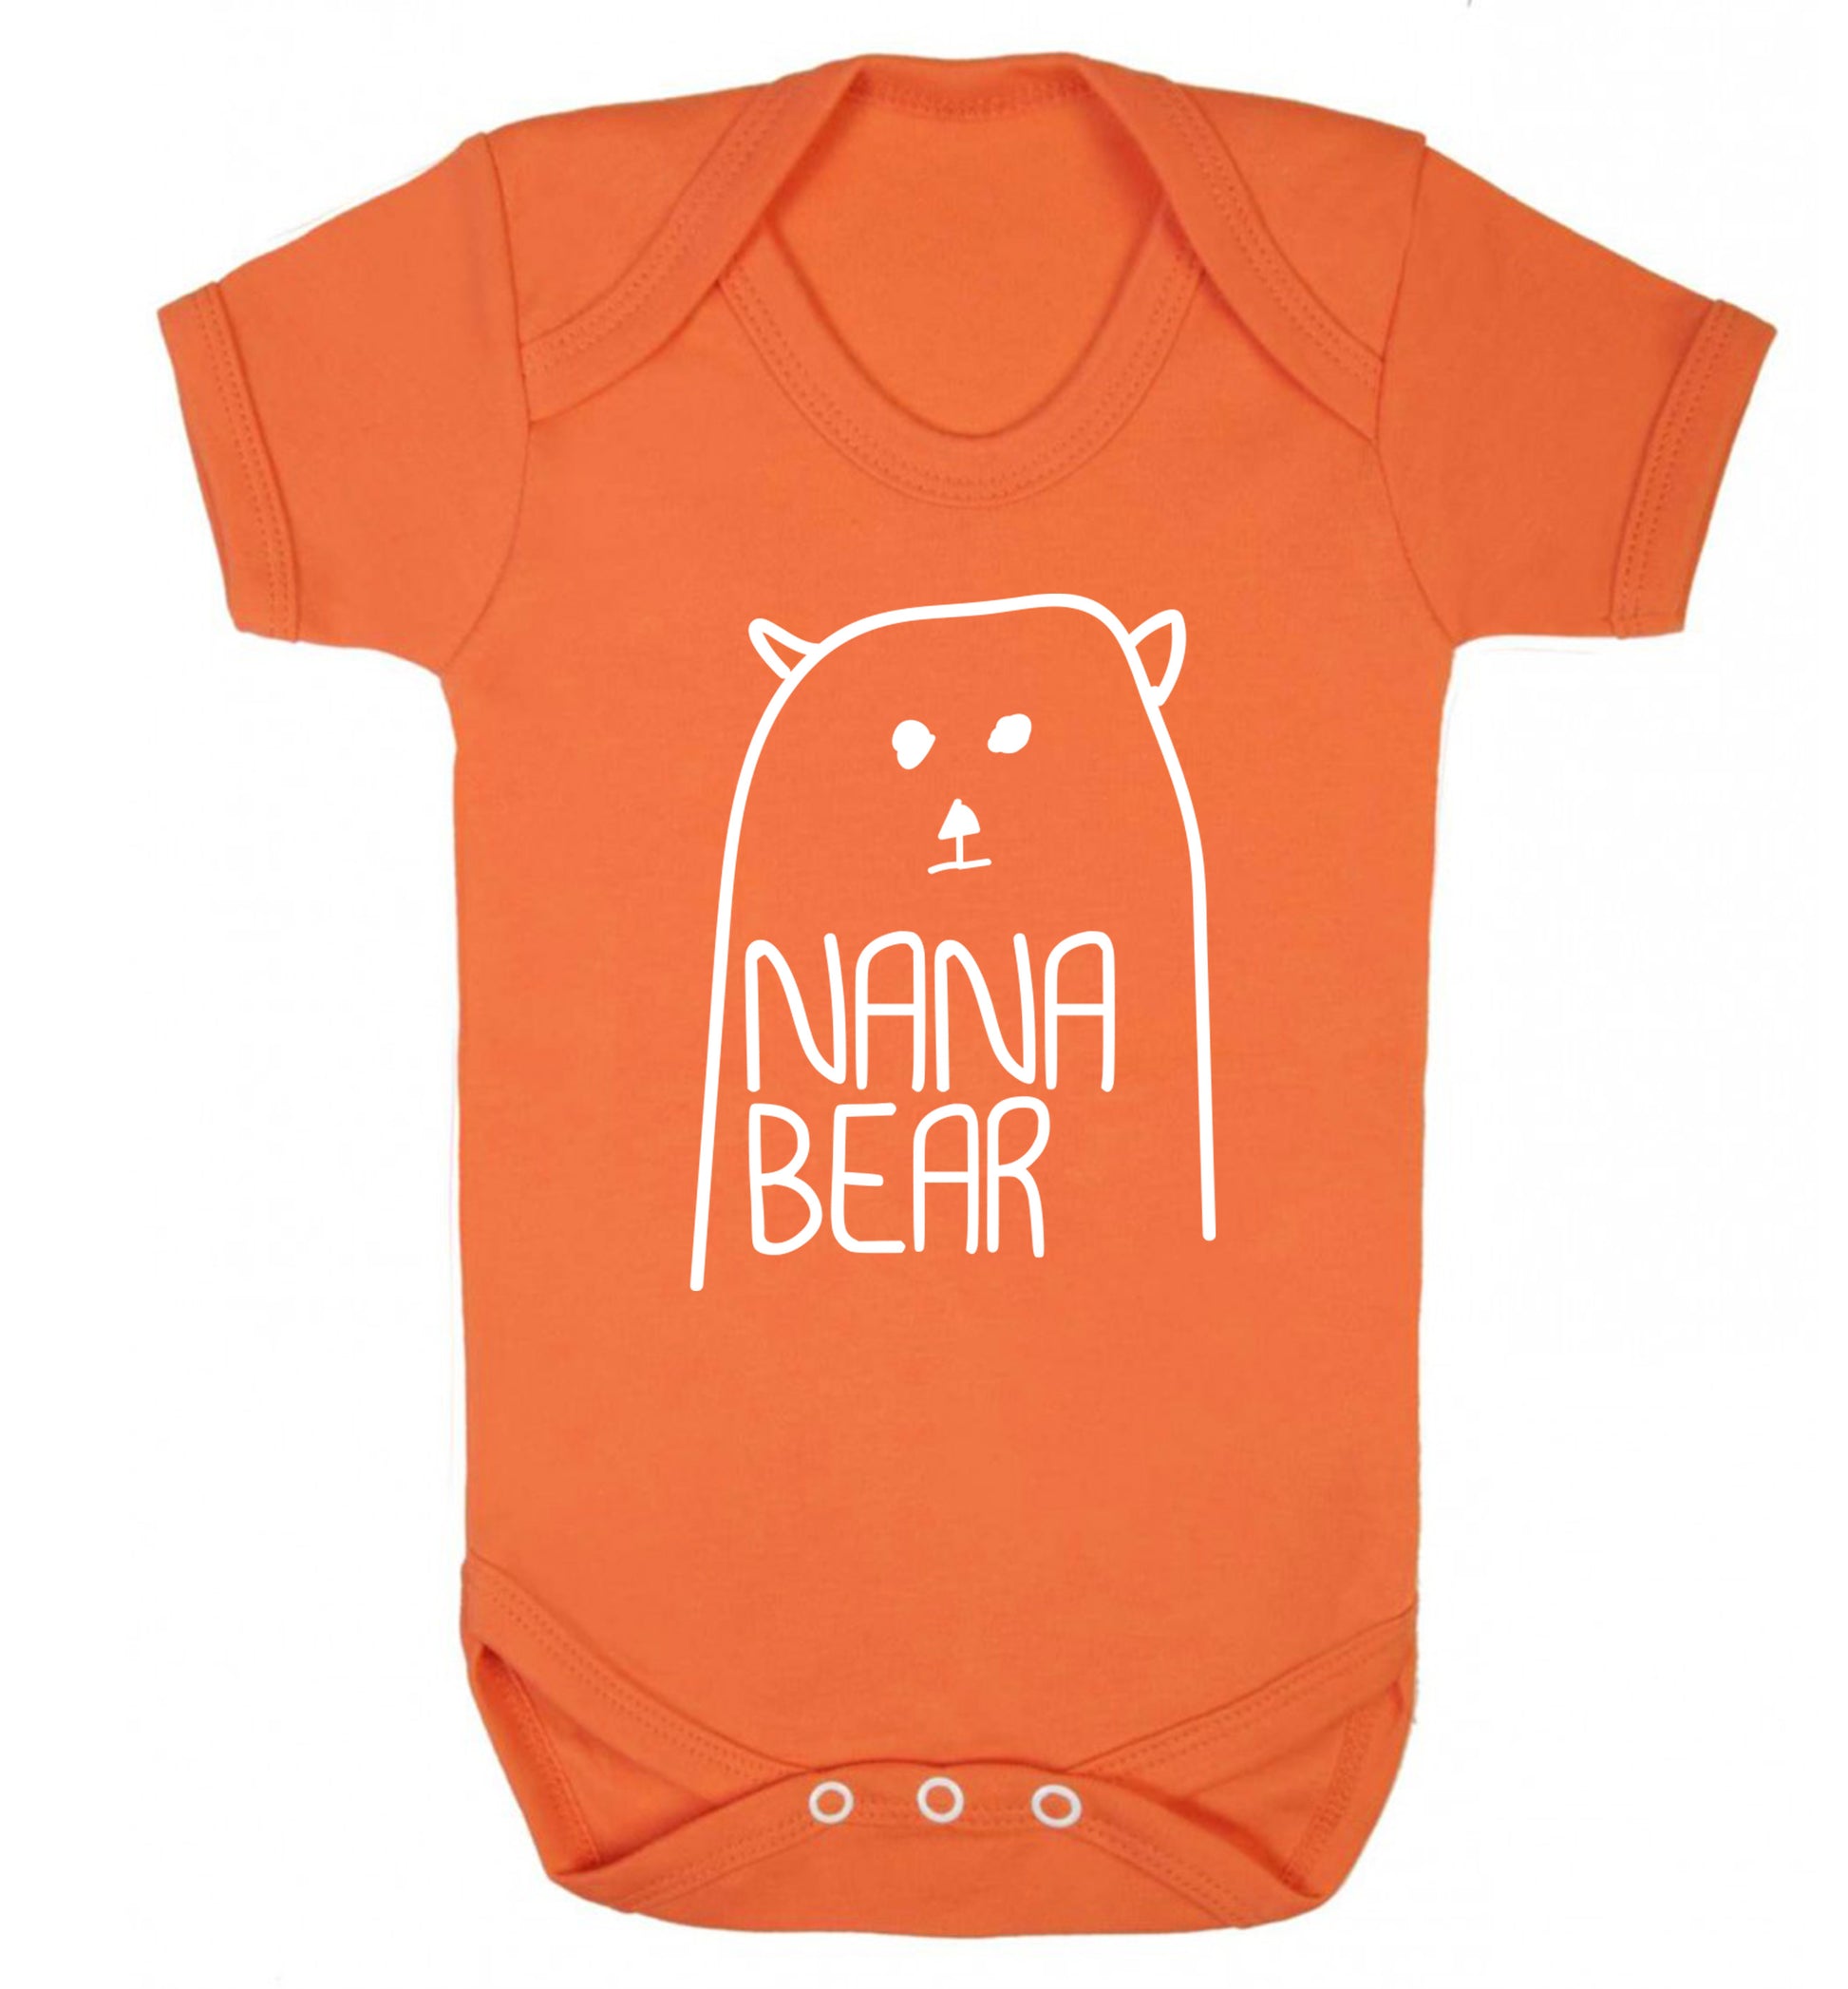 Nana bear Baby Vest orange 18-24 months